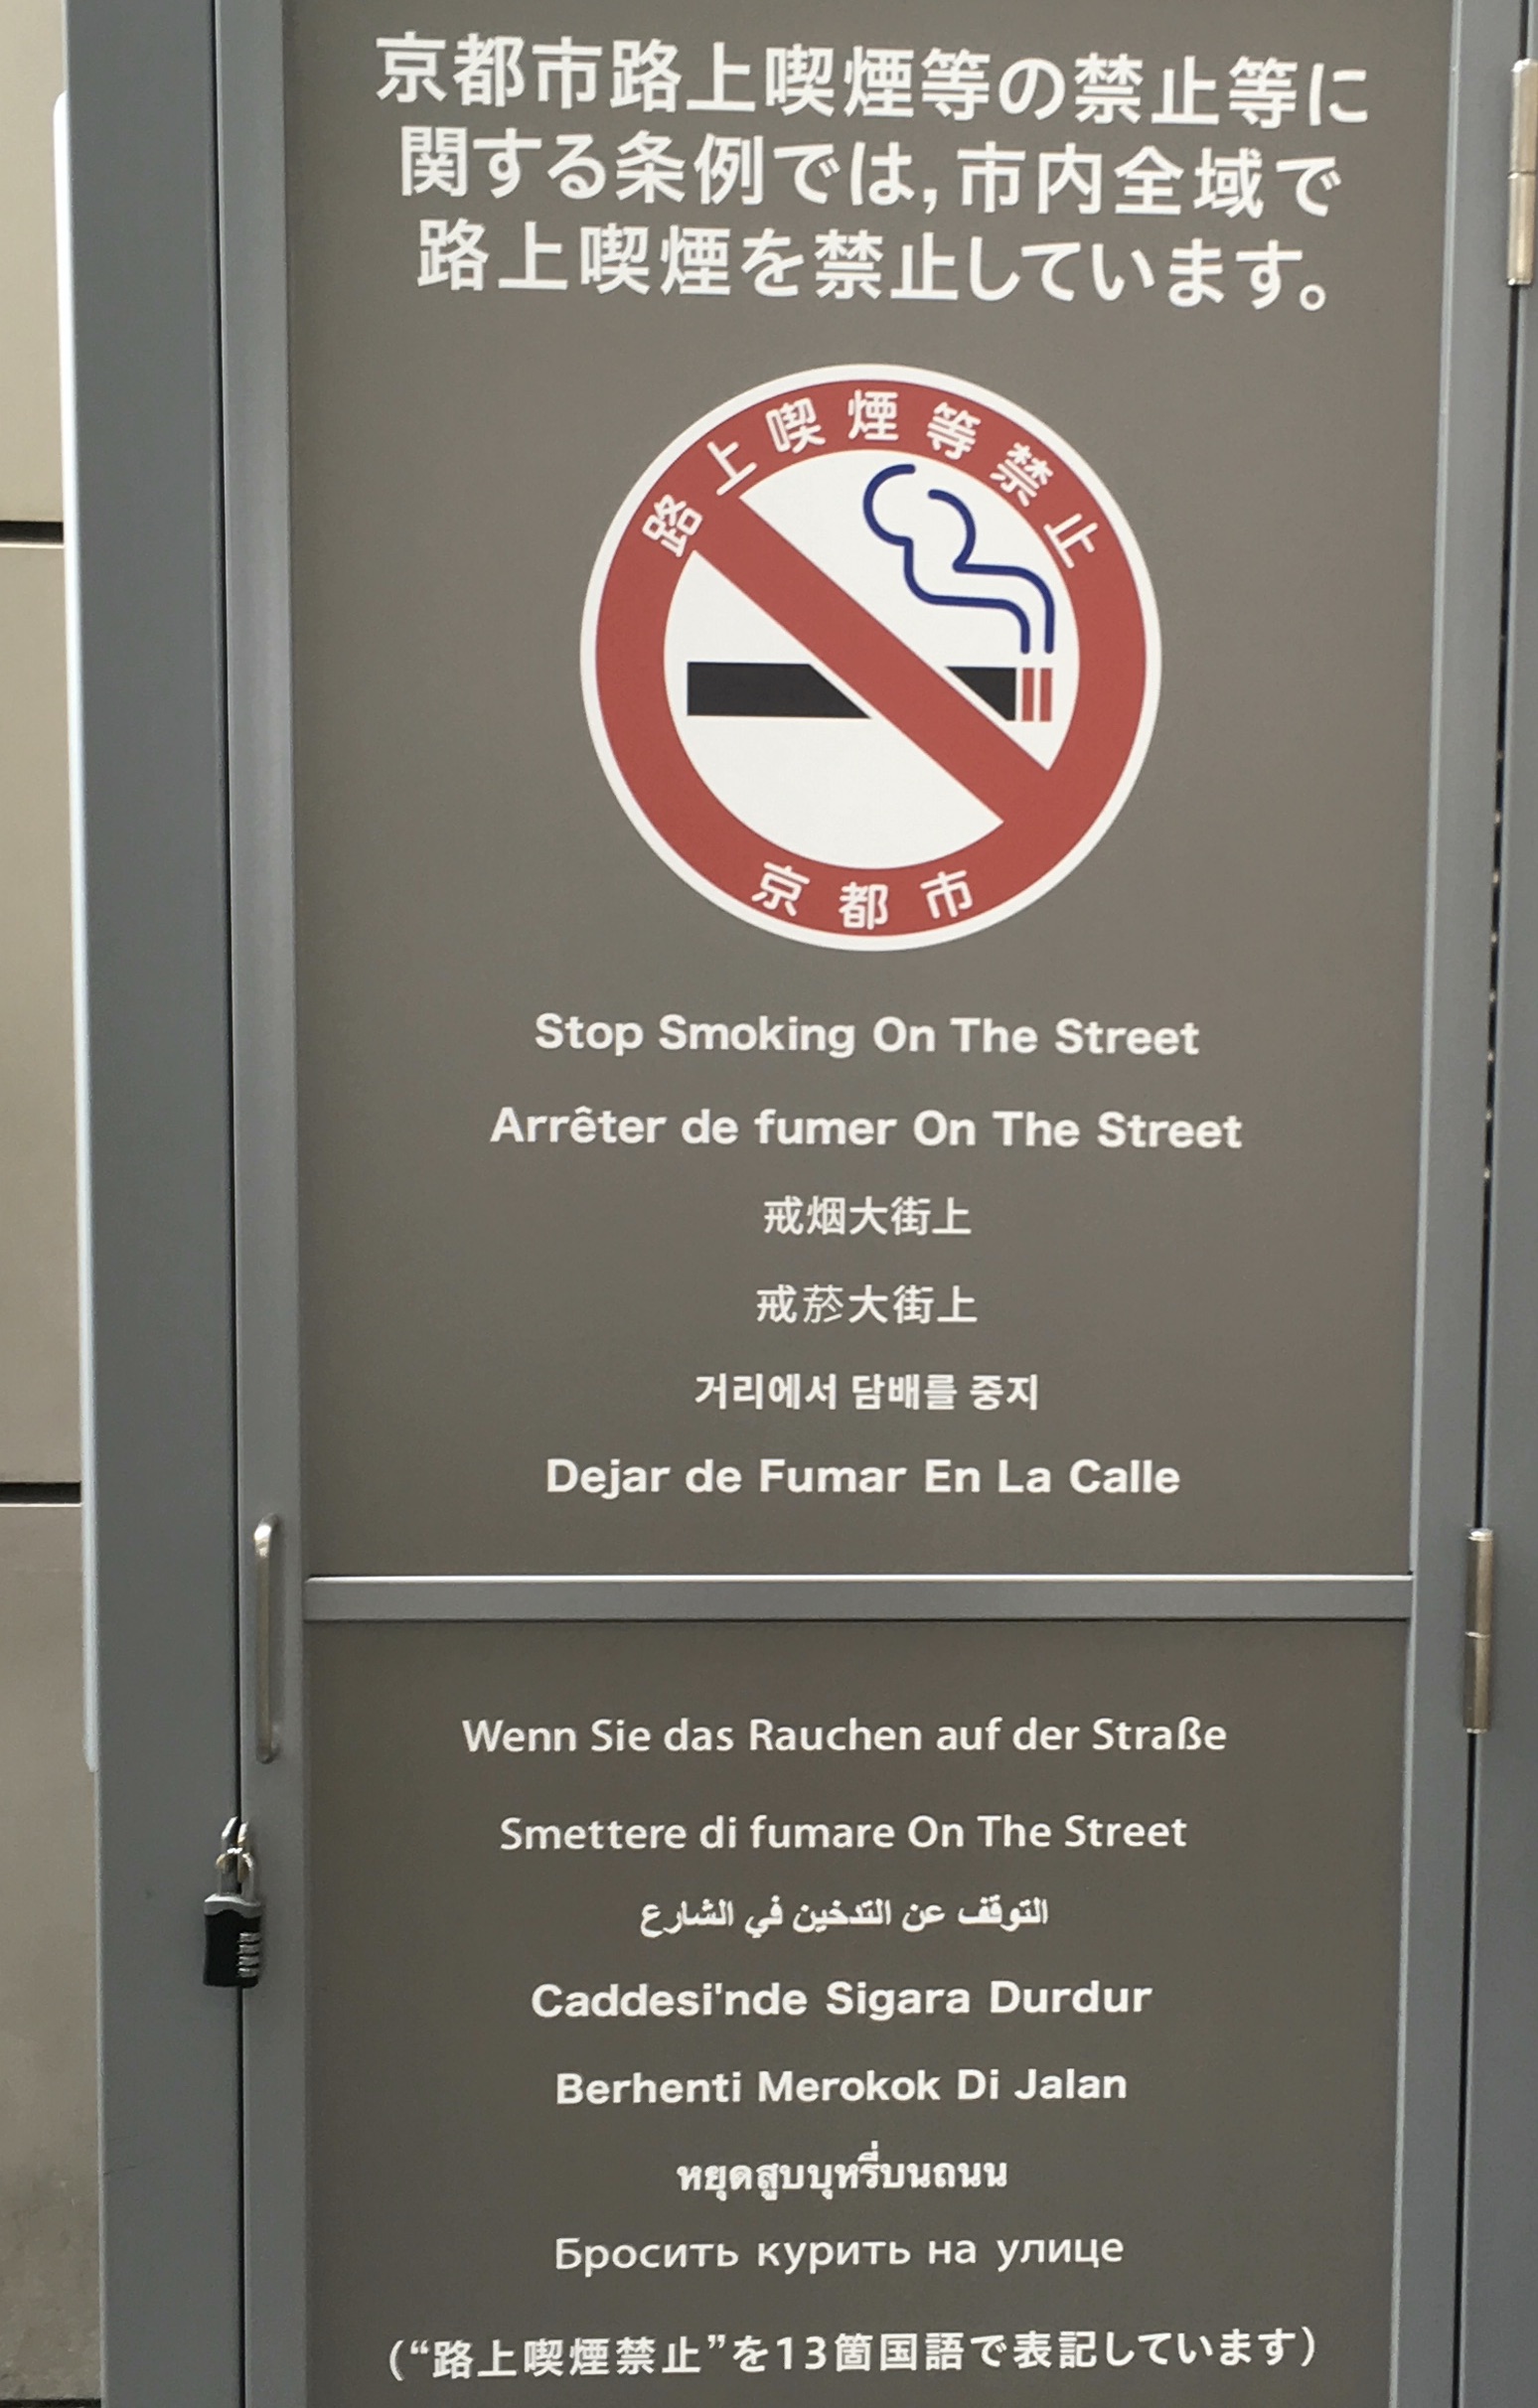 「Stop Smoking On The Street.」という英語を各言語に機械翻訳した様子